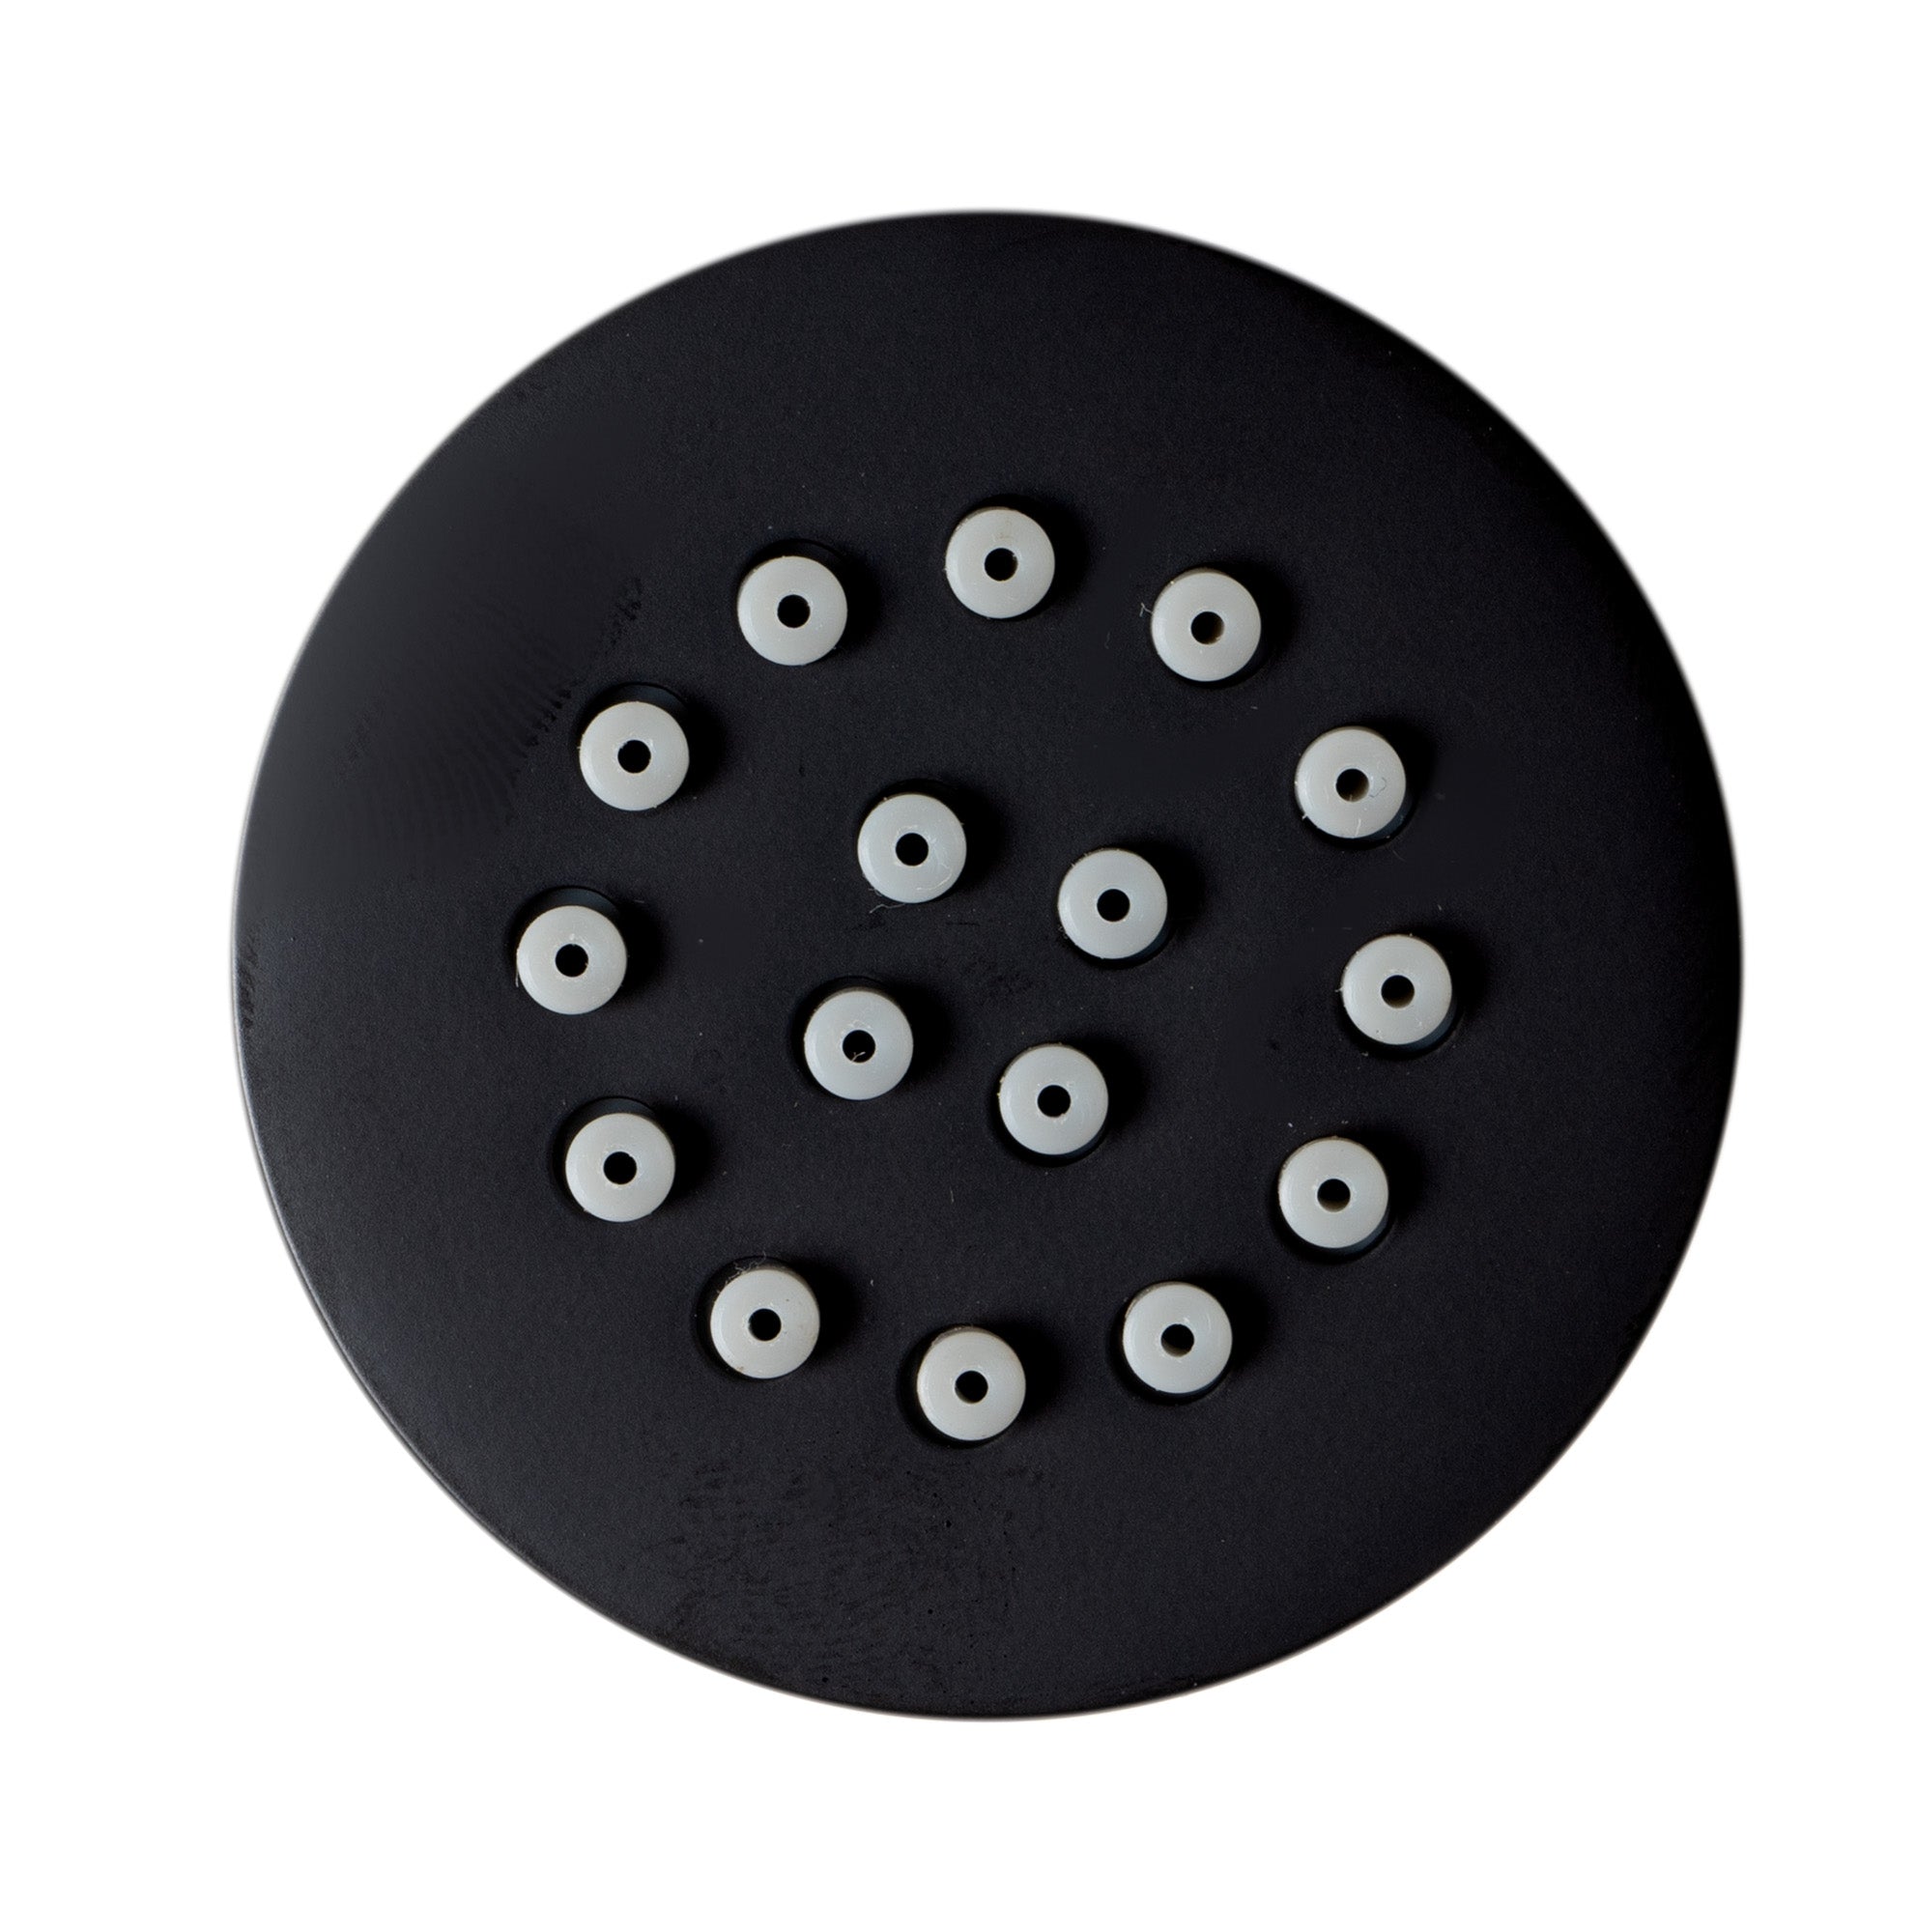 ALFI Brand - Black Matte 2" Round Adjustable Shower Body Spray | AB3830-BM